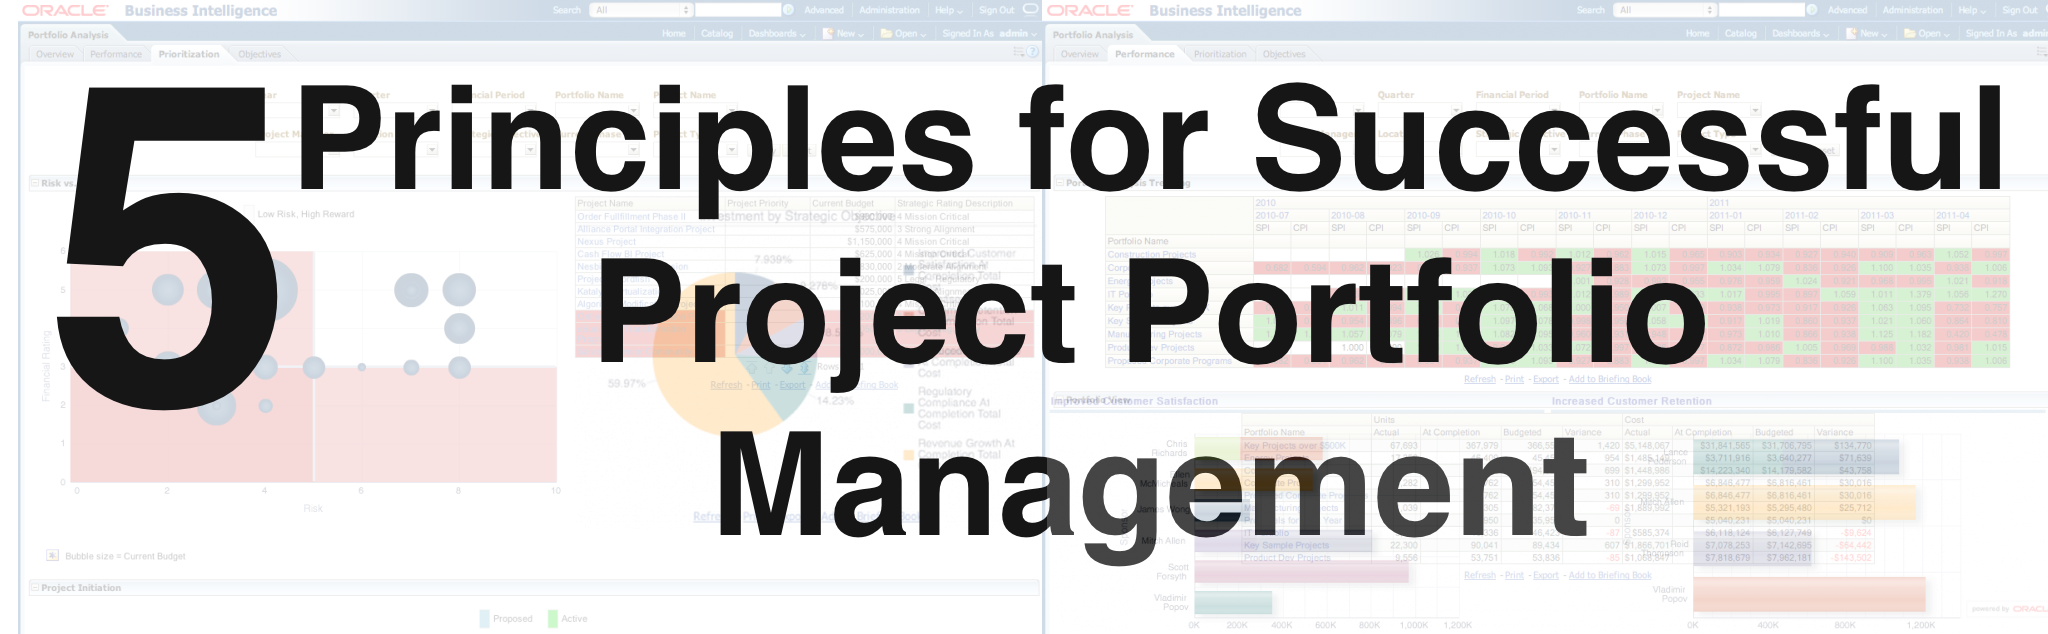 Successful Project Portfolio Management